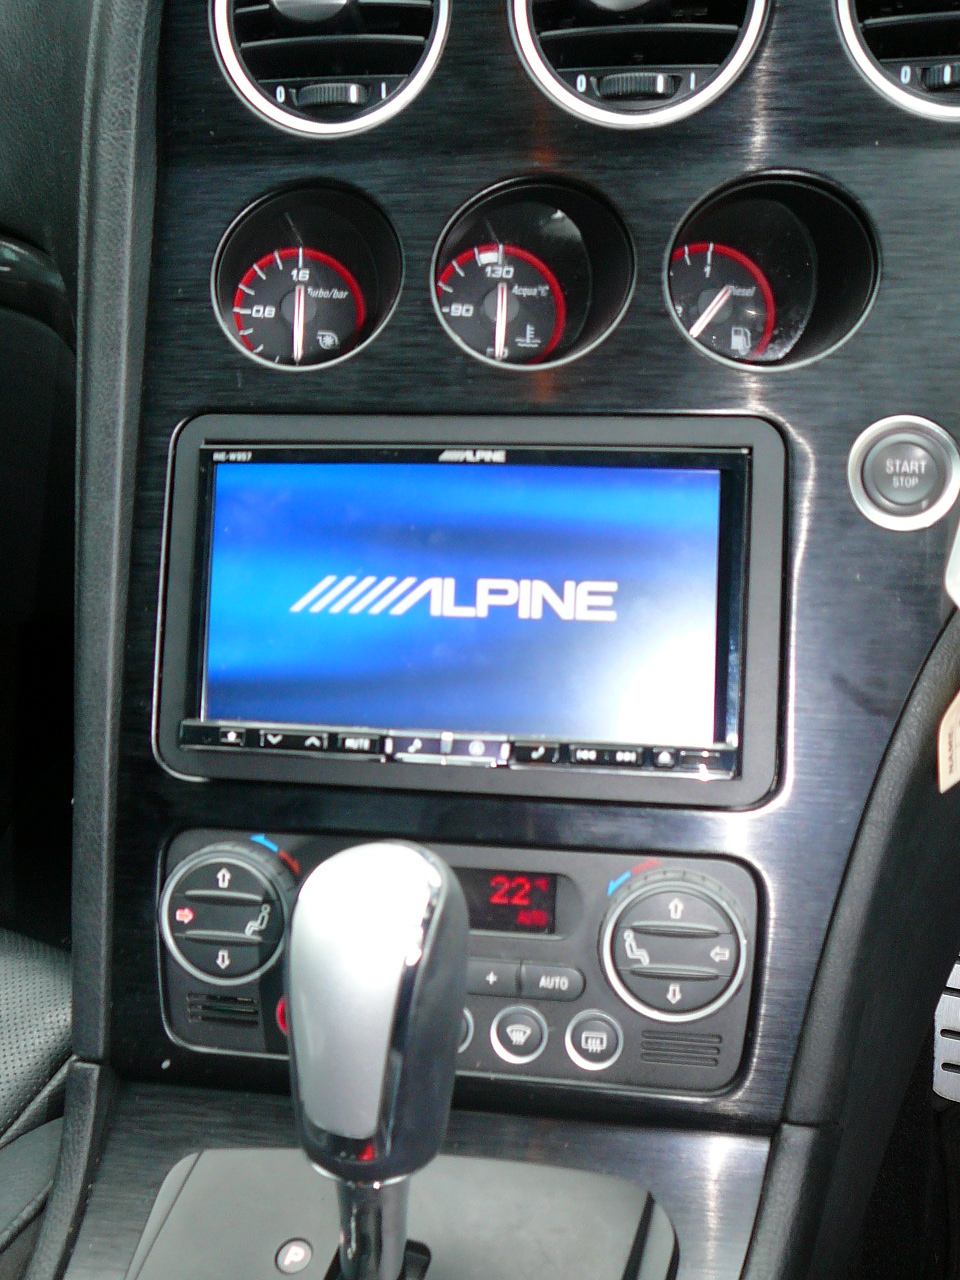 Alfa Romeo 159, Alpine GPS Navigation System & Reverse Camera